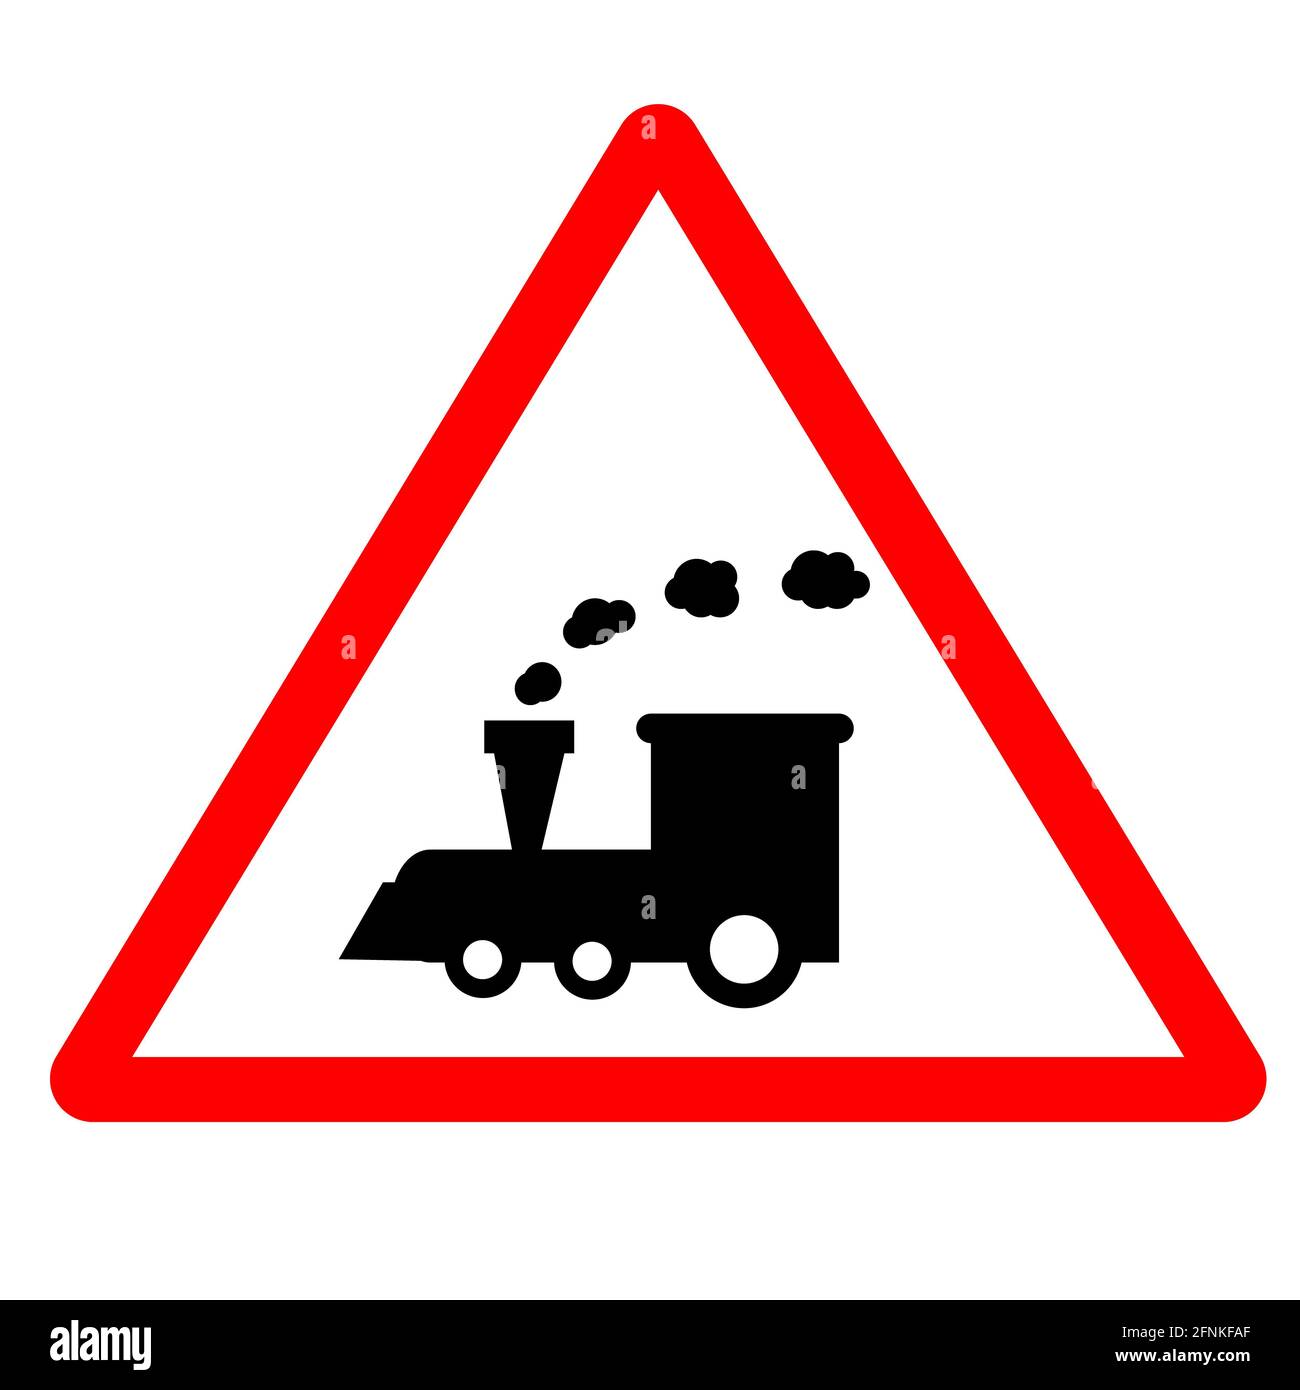 train warning sign on white background. railway train level crossing road sign. railway symbol. flat style. Stock Photo